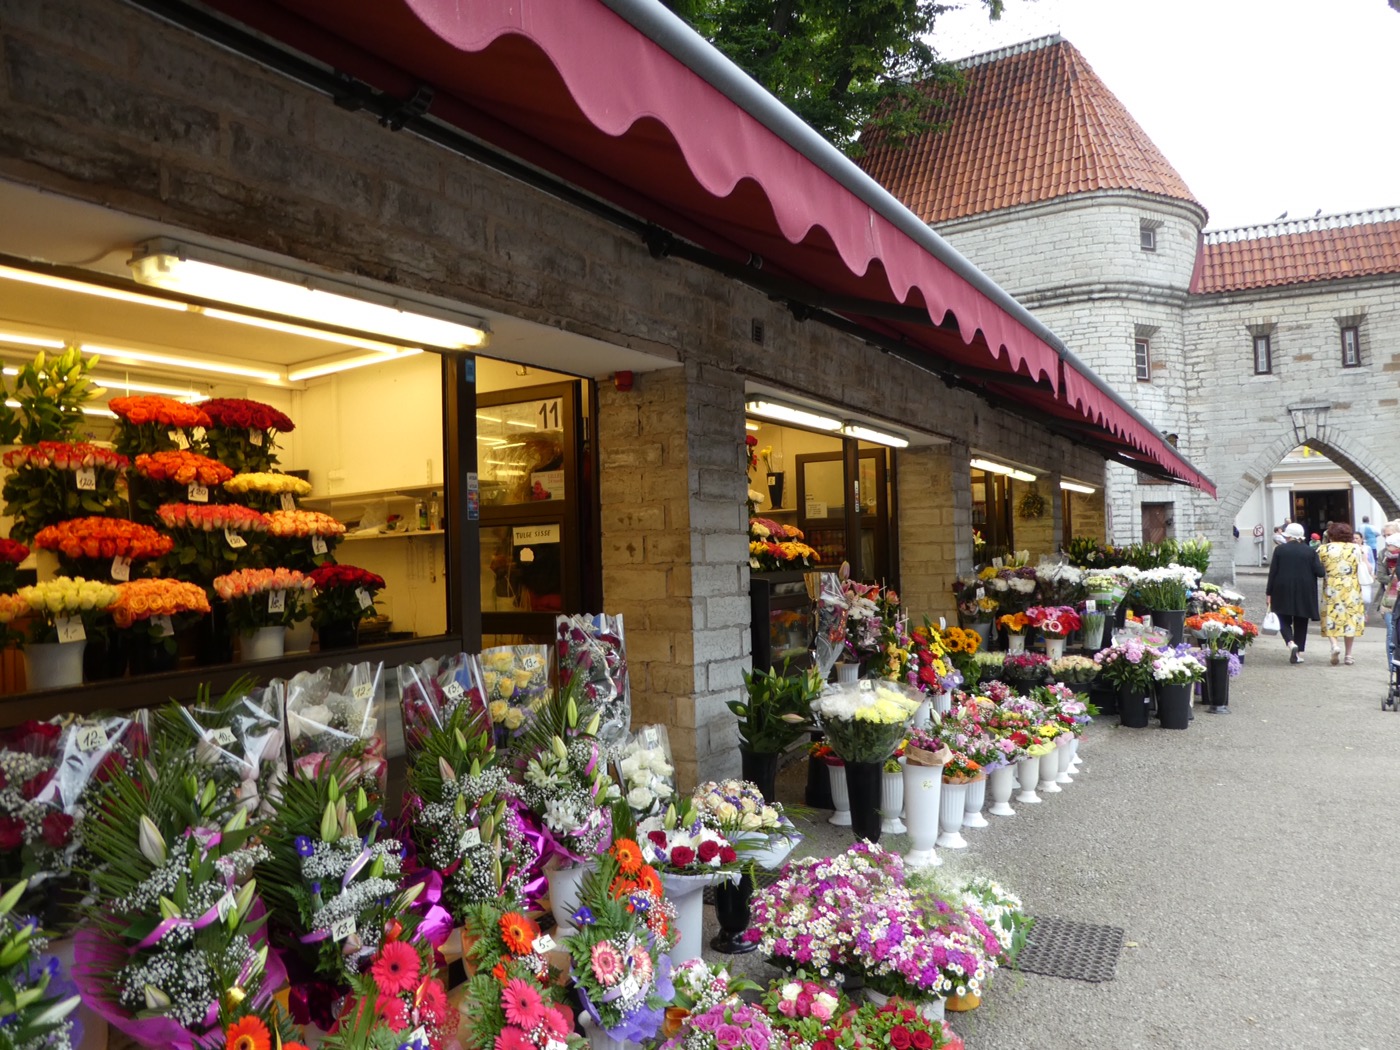 Flower Market, Old Town Tallinn